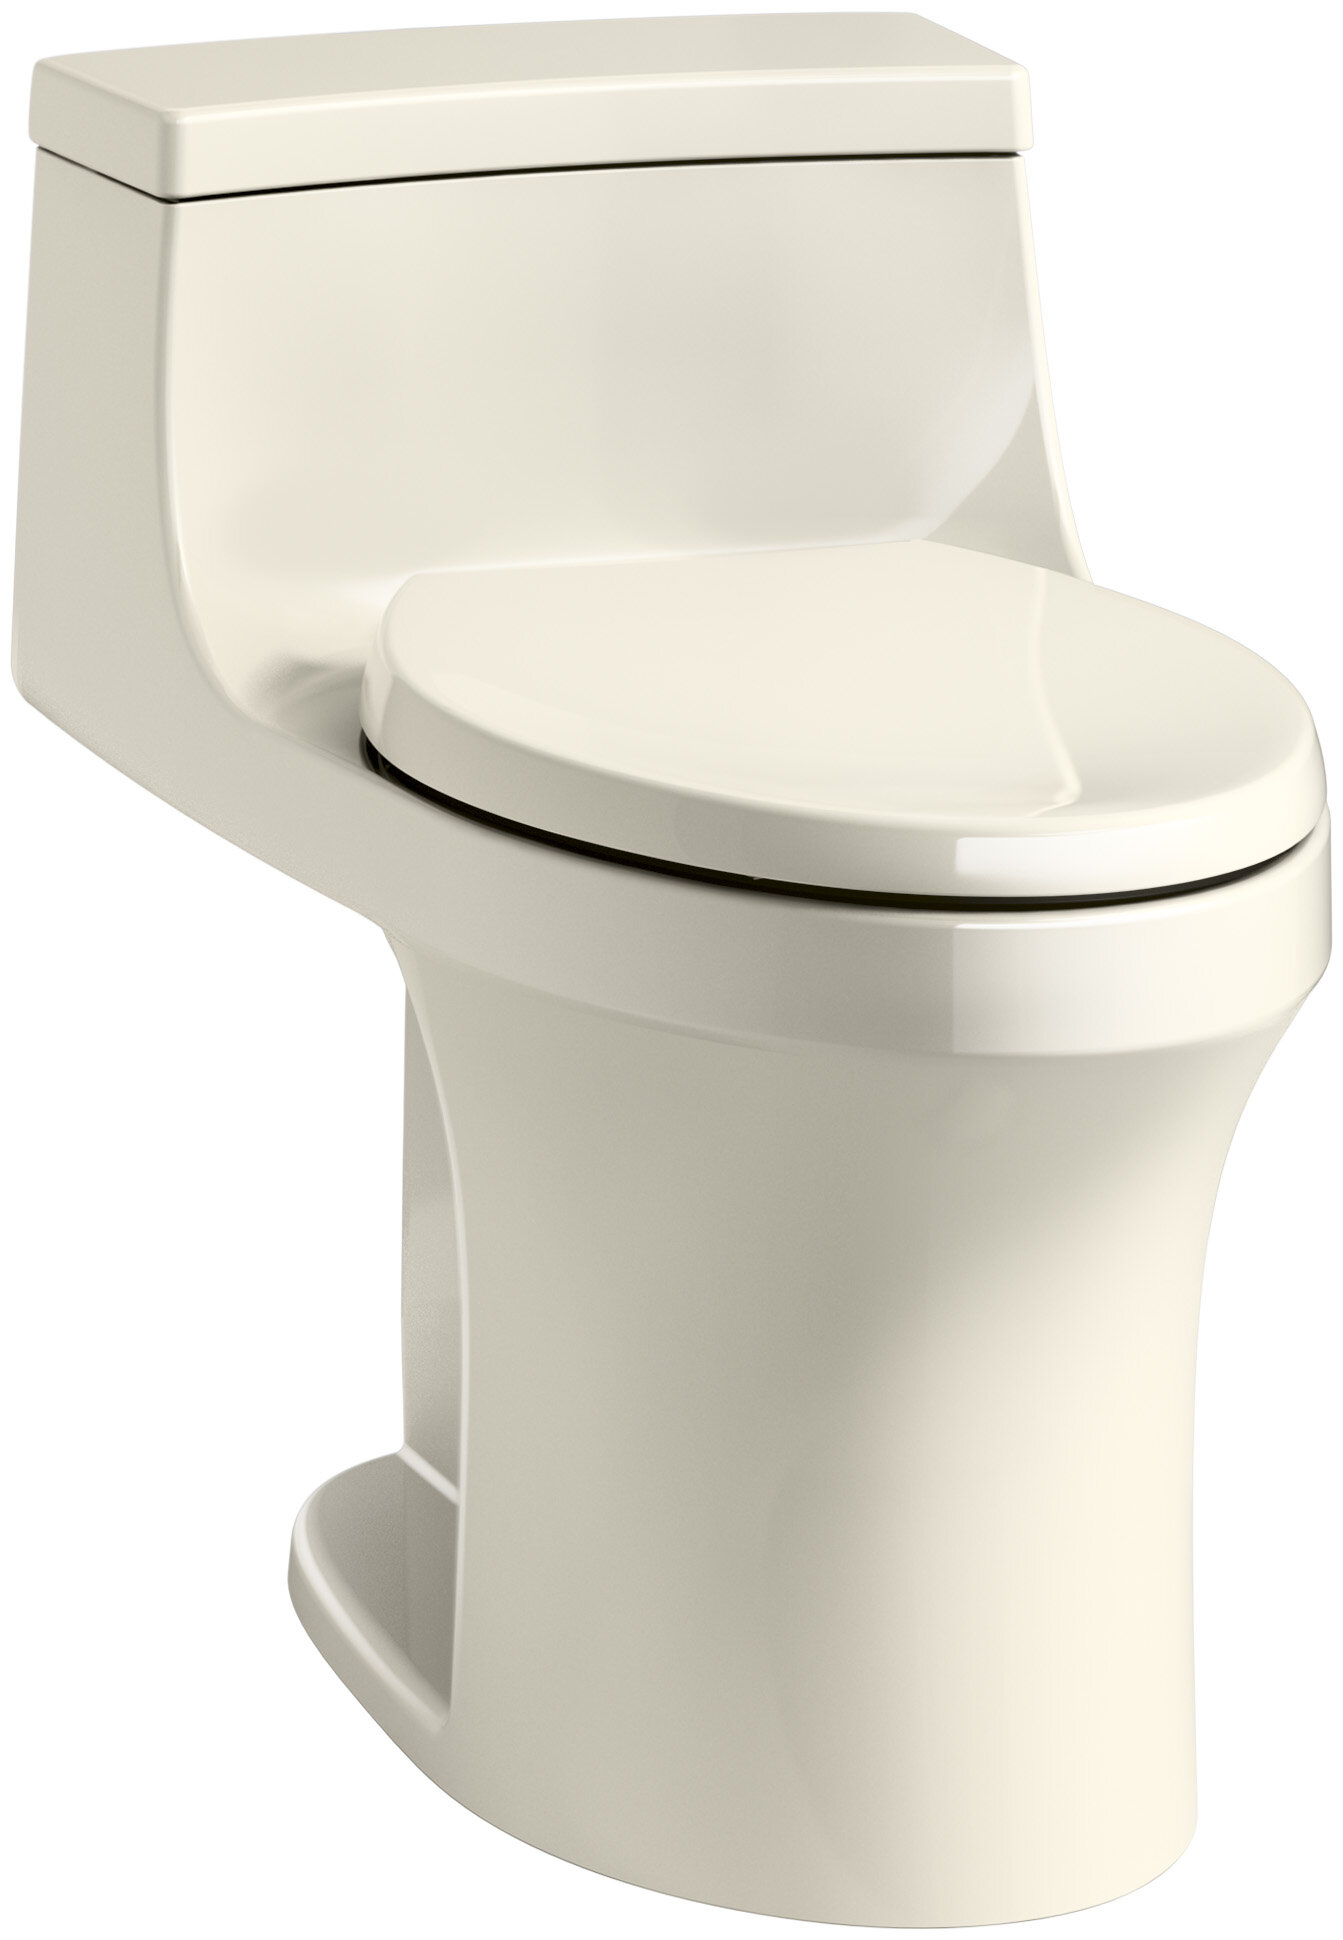 Almond Kohler K-3977-RA-47 Wellworth Toilet 